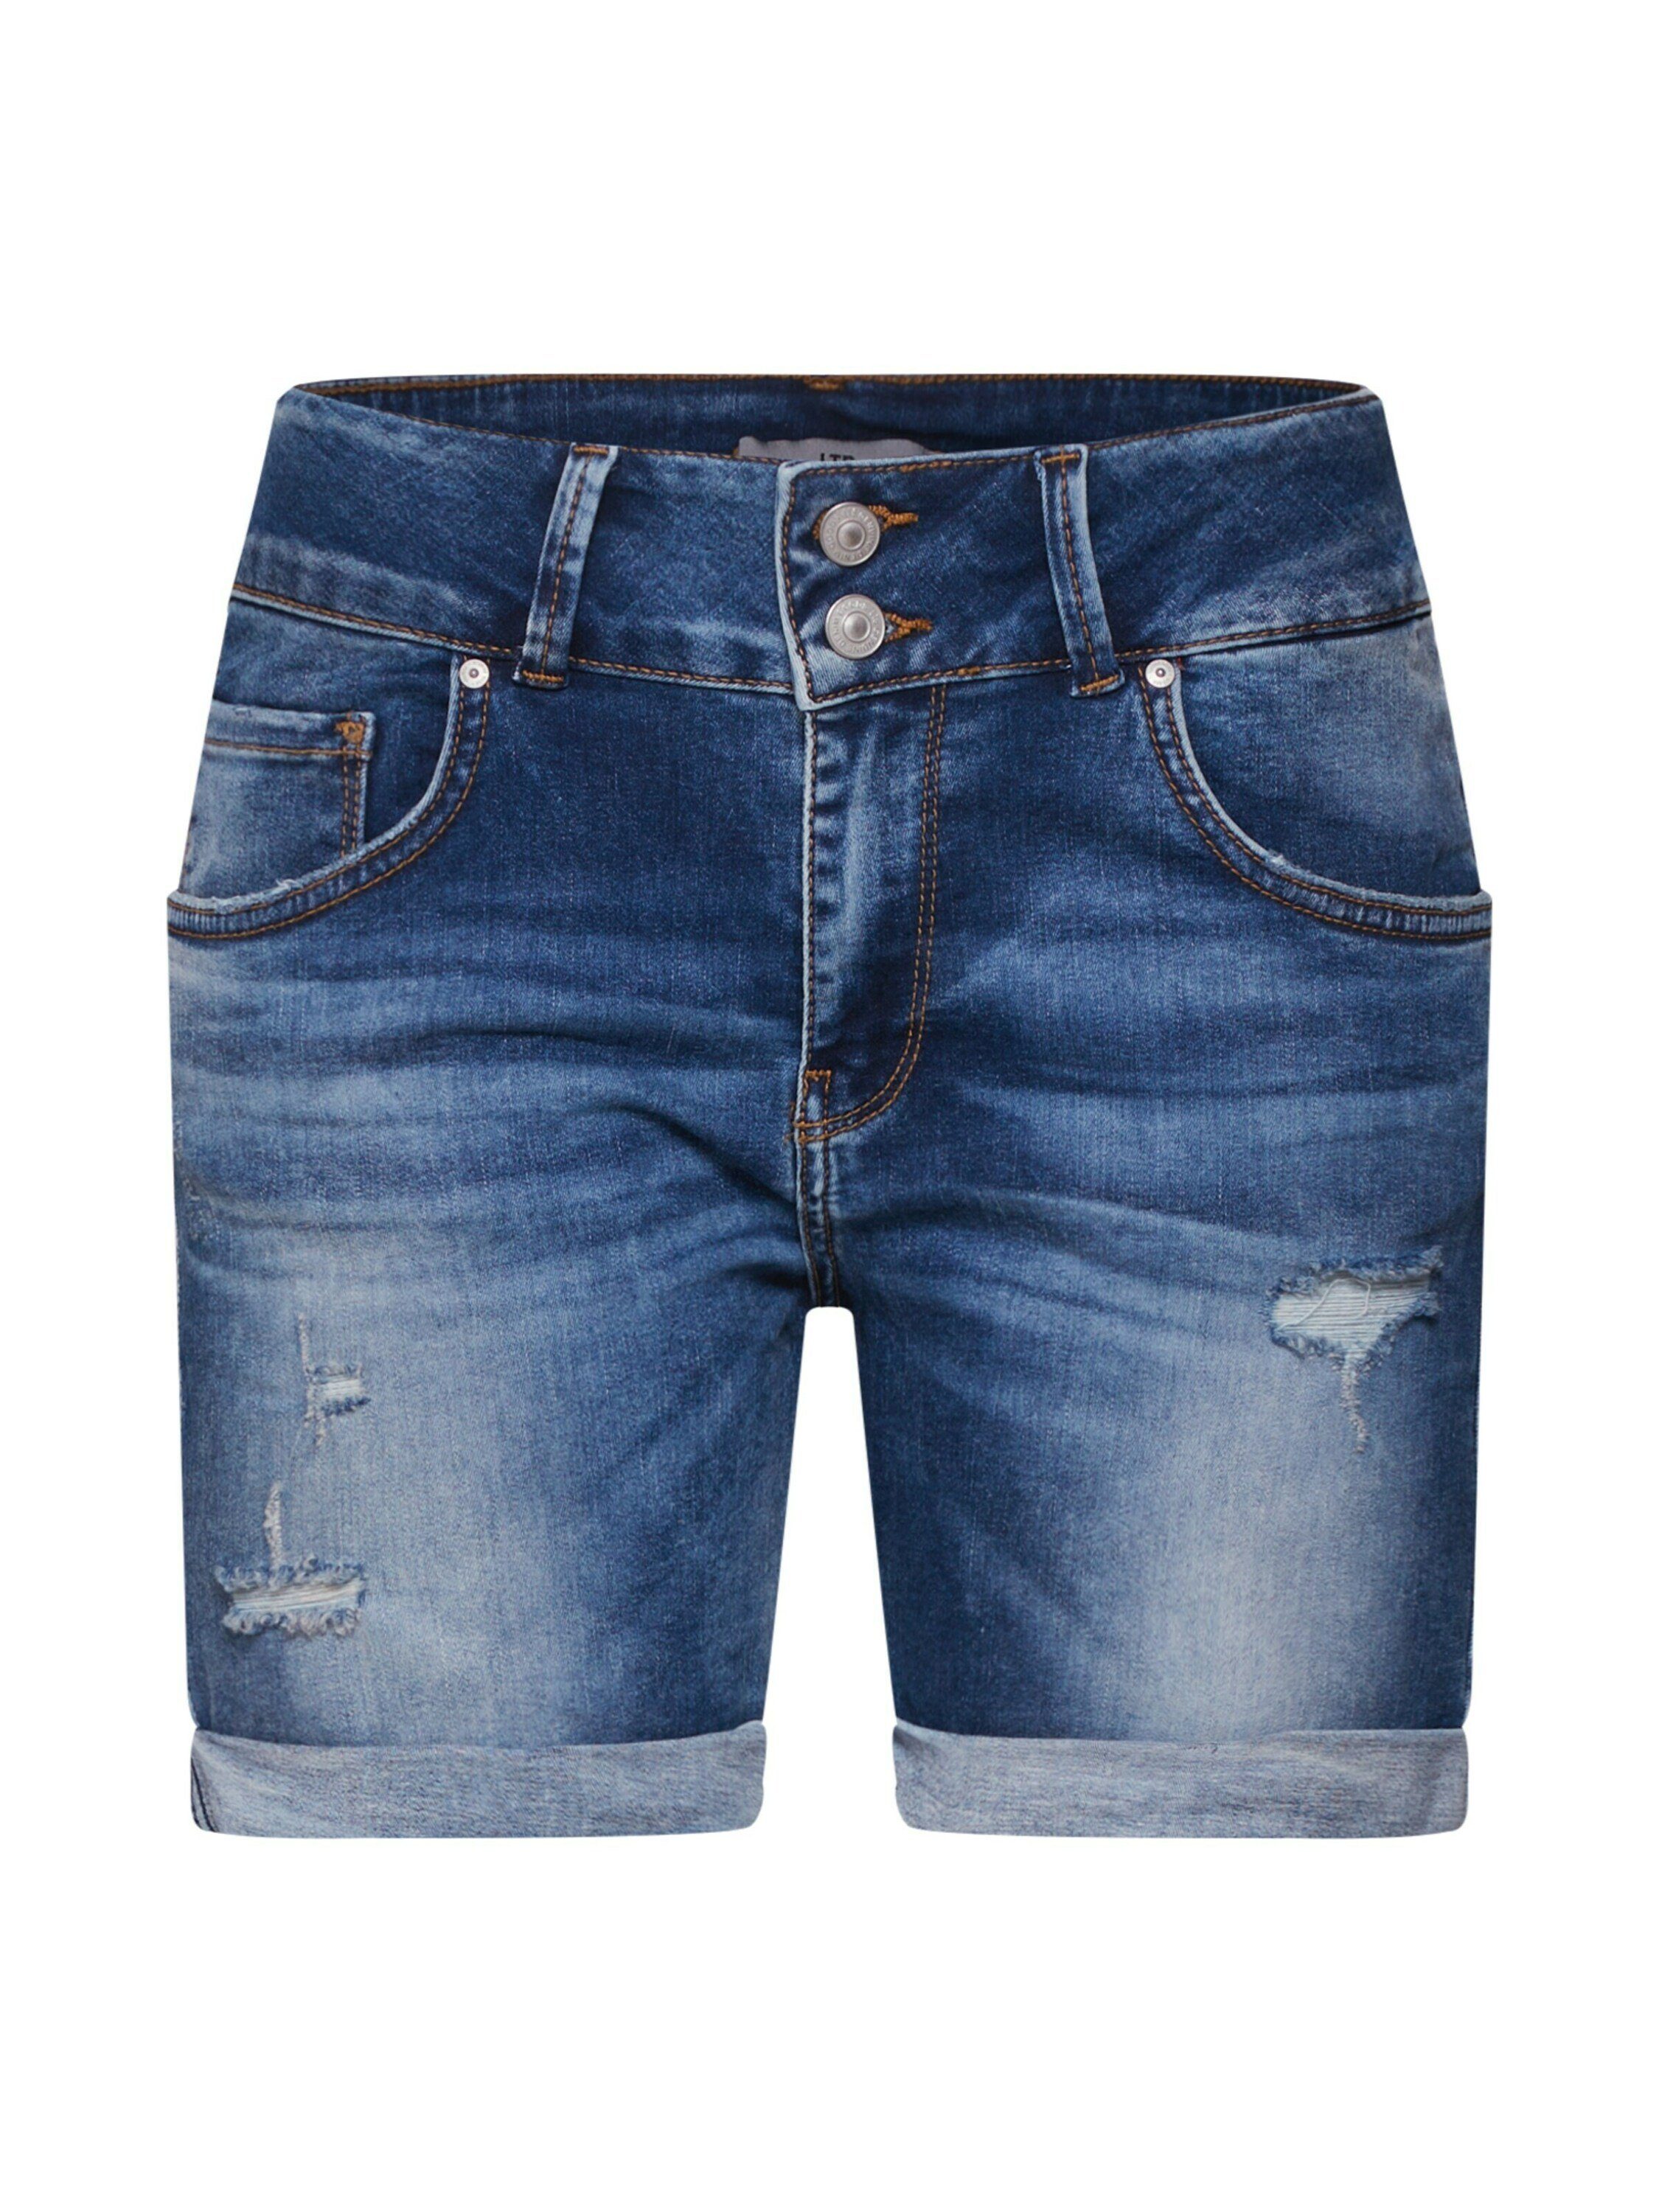 LTB Jeans Shorts online kaufen | OTTO